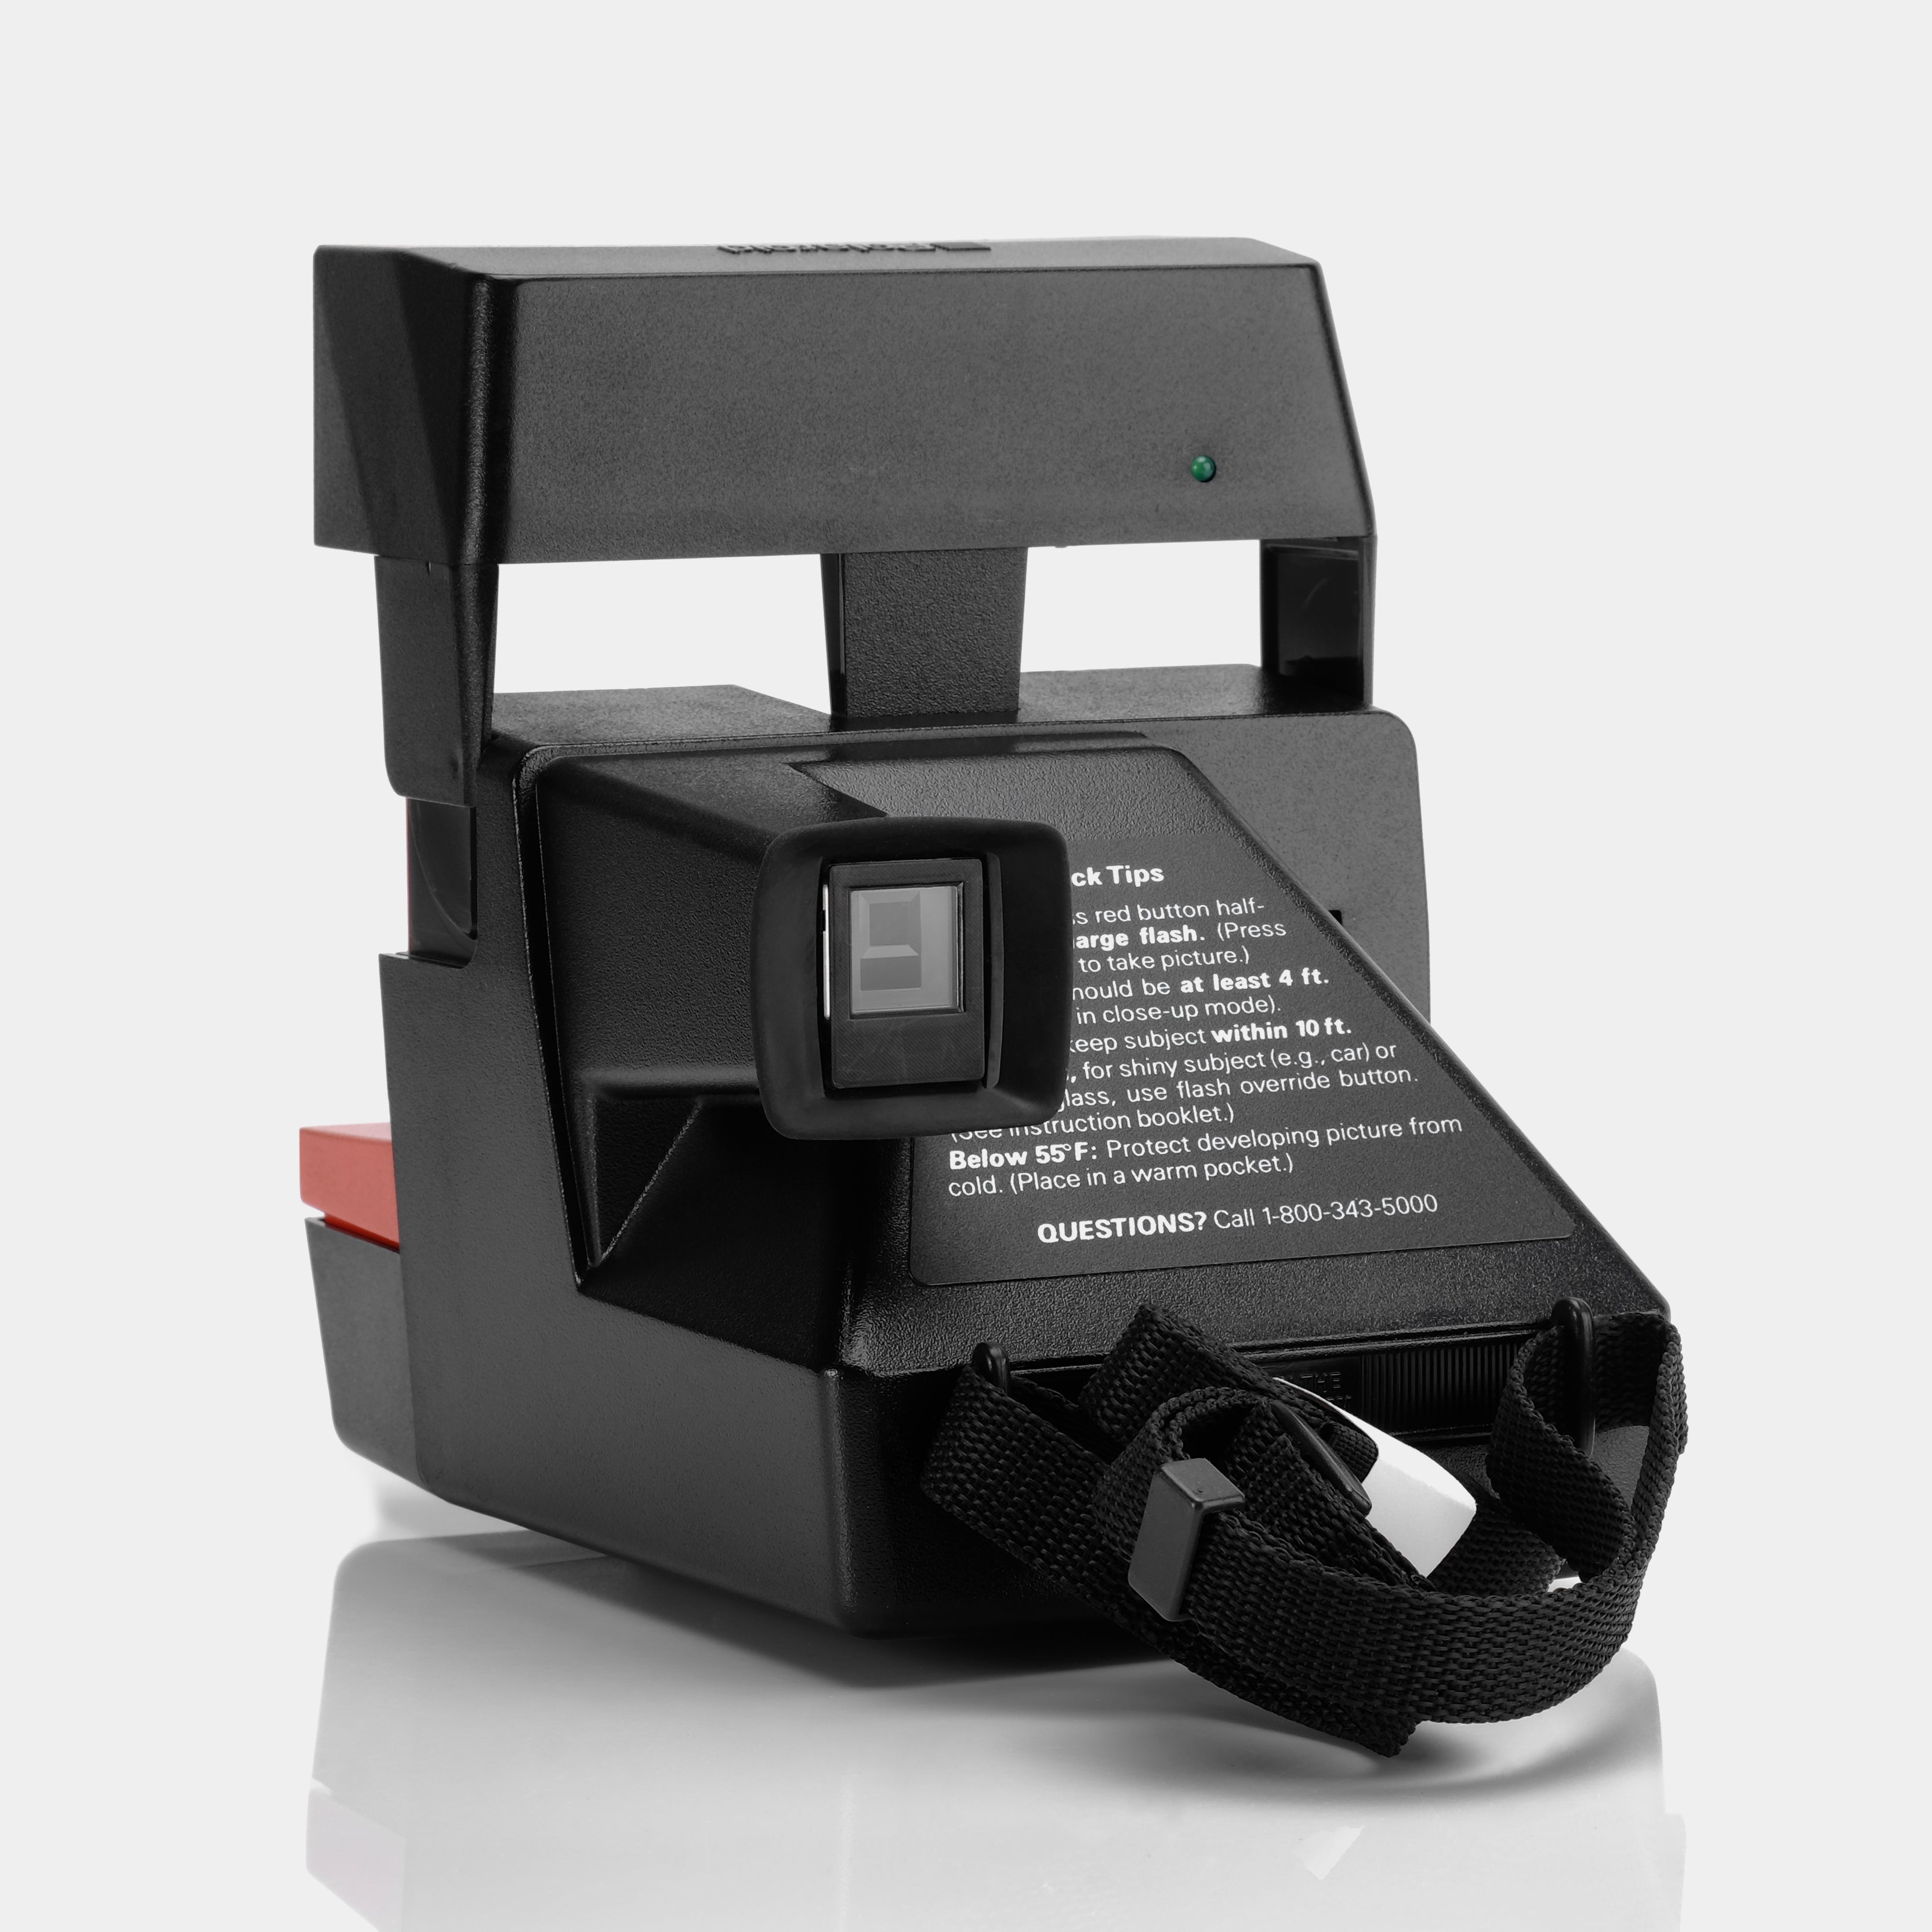 Polaroid 600 State Farm Business Edition Instant Film Camera